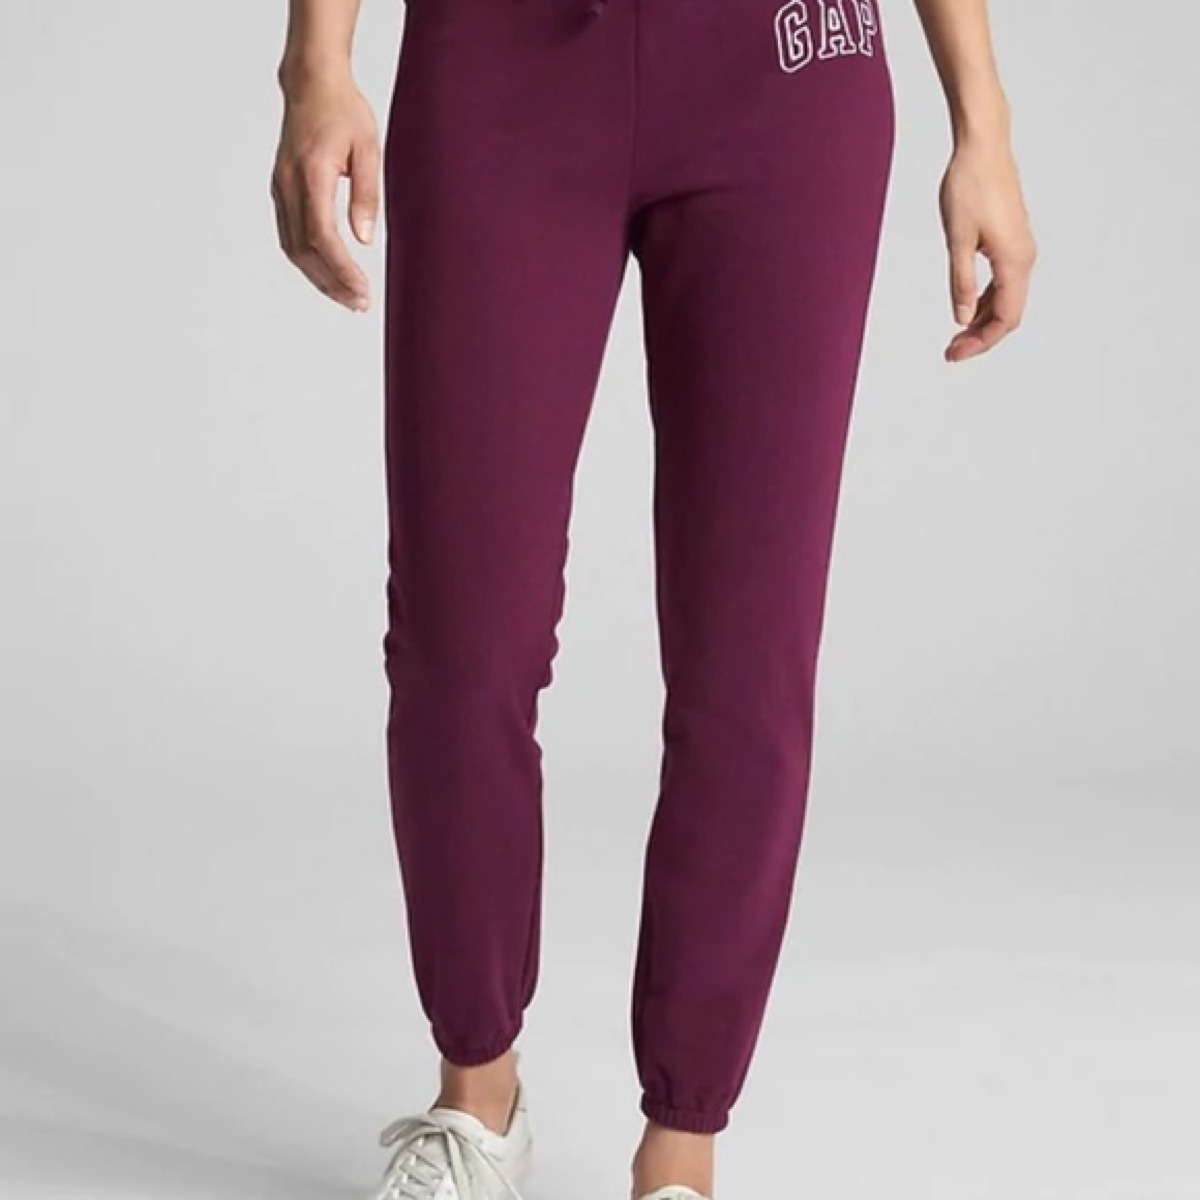 Woman wearing burgundy jogging pants